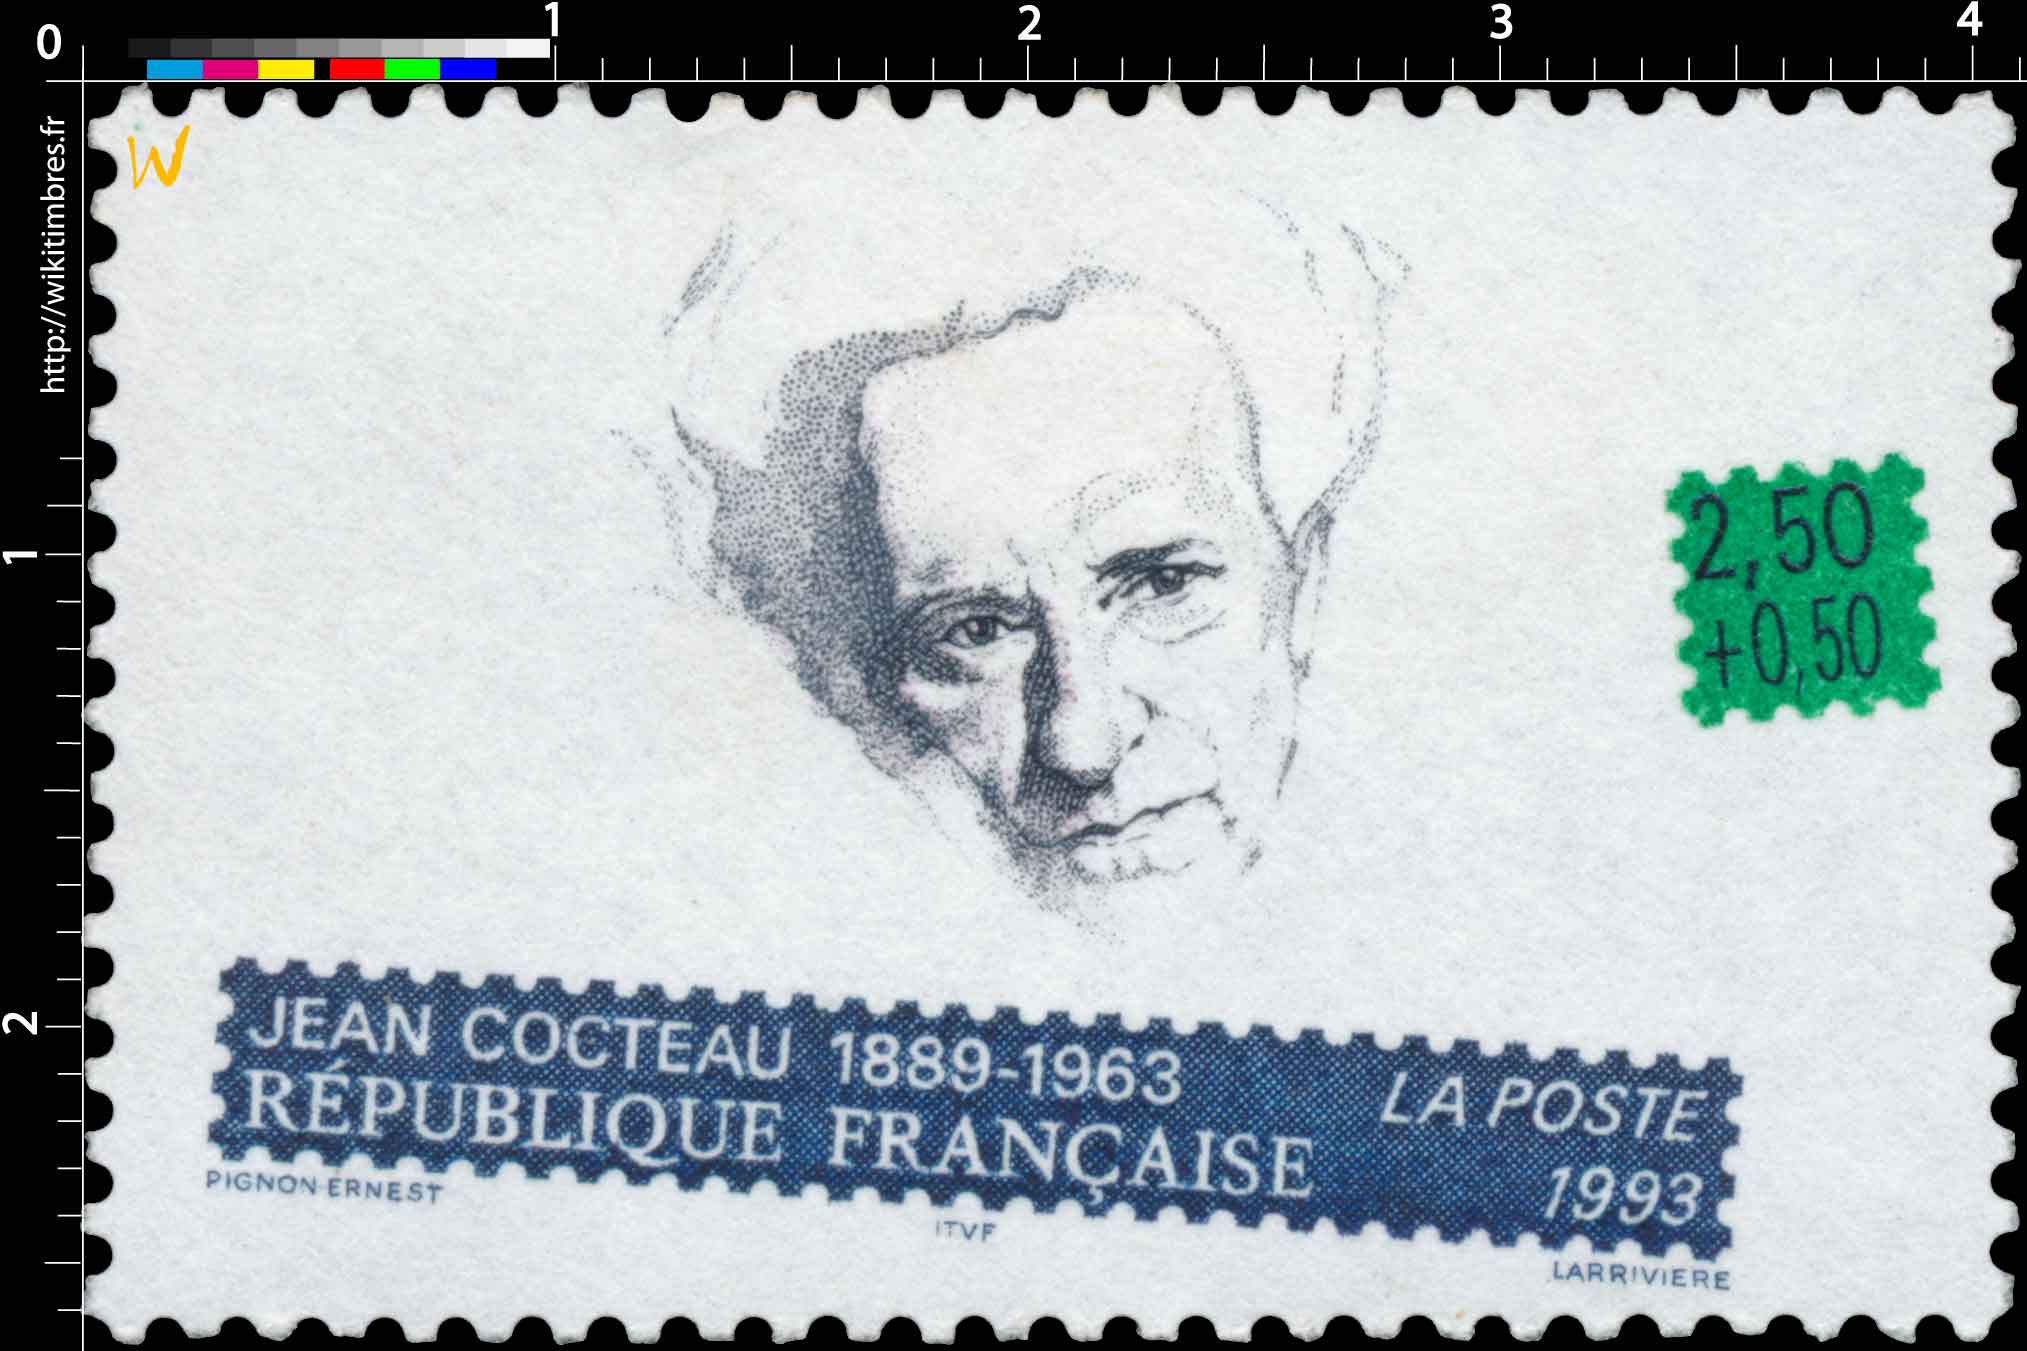 1993 JEAN COCTEAU 1889-1963